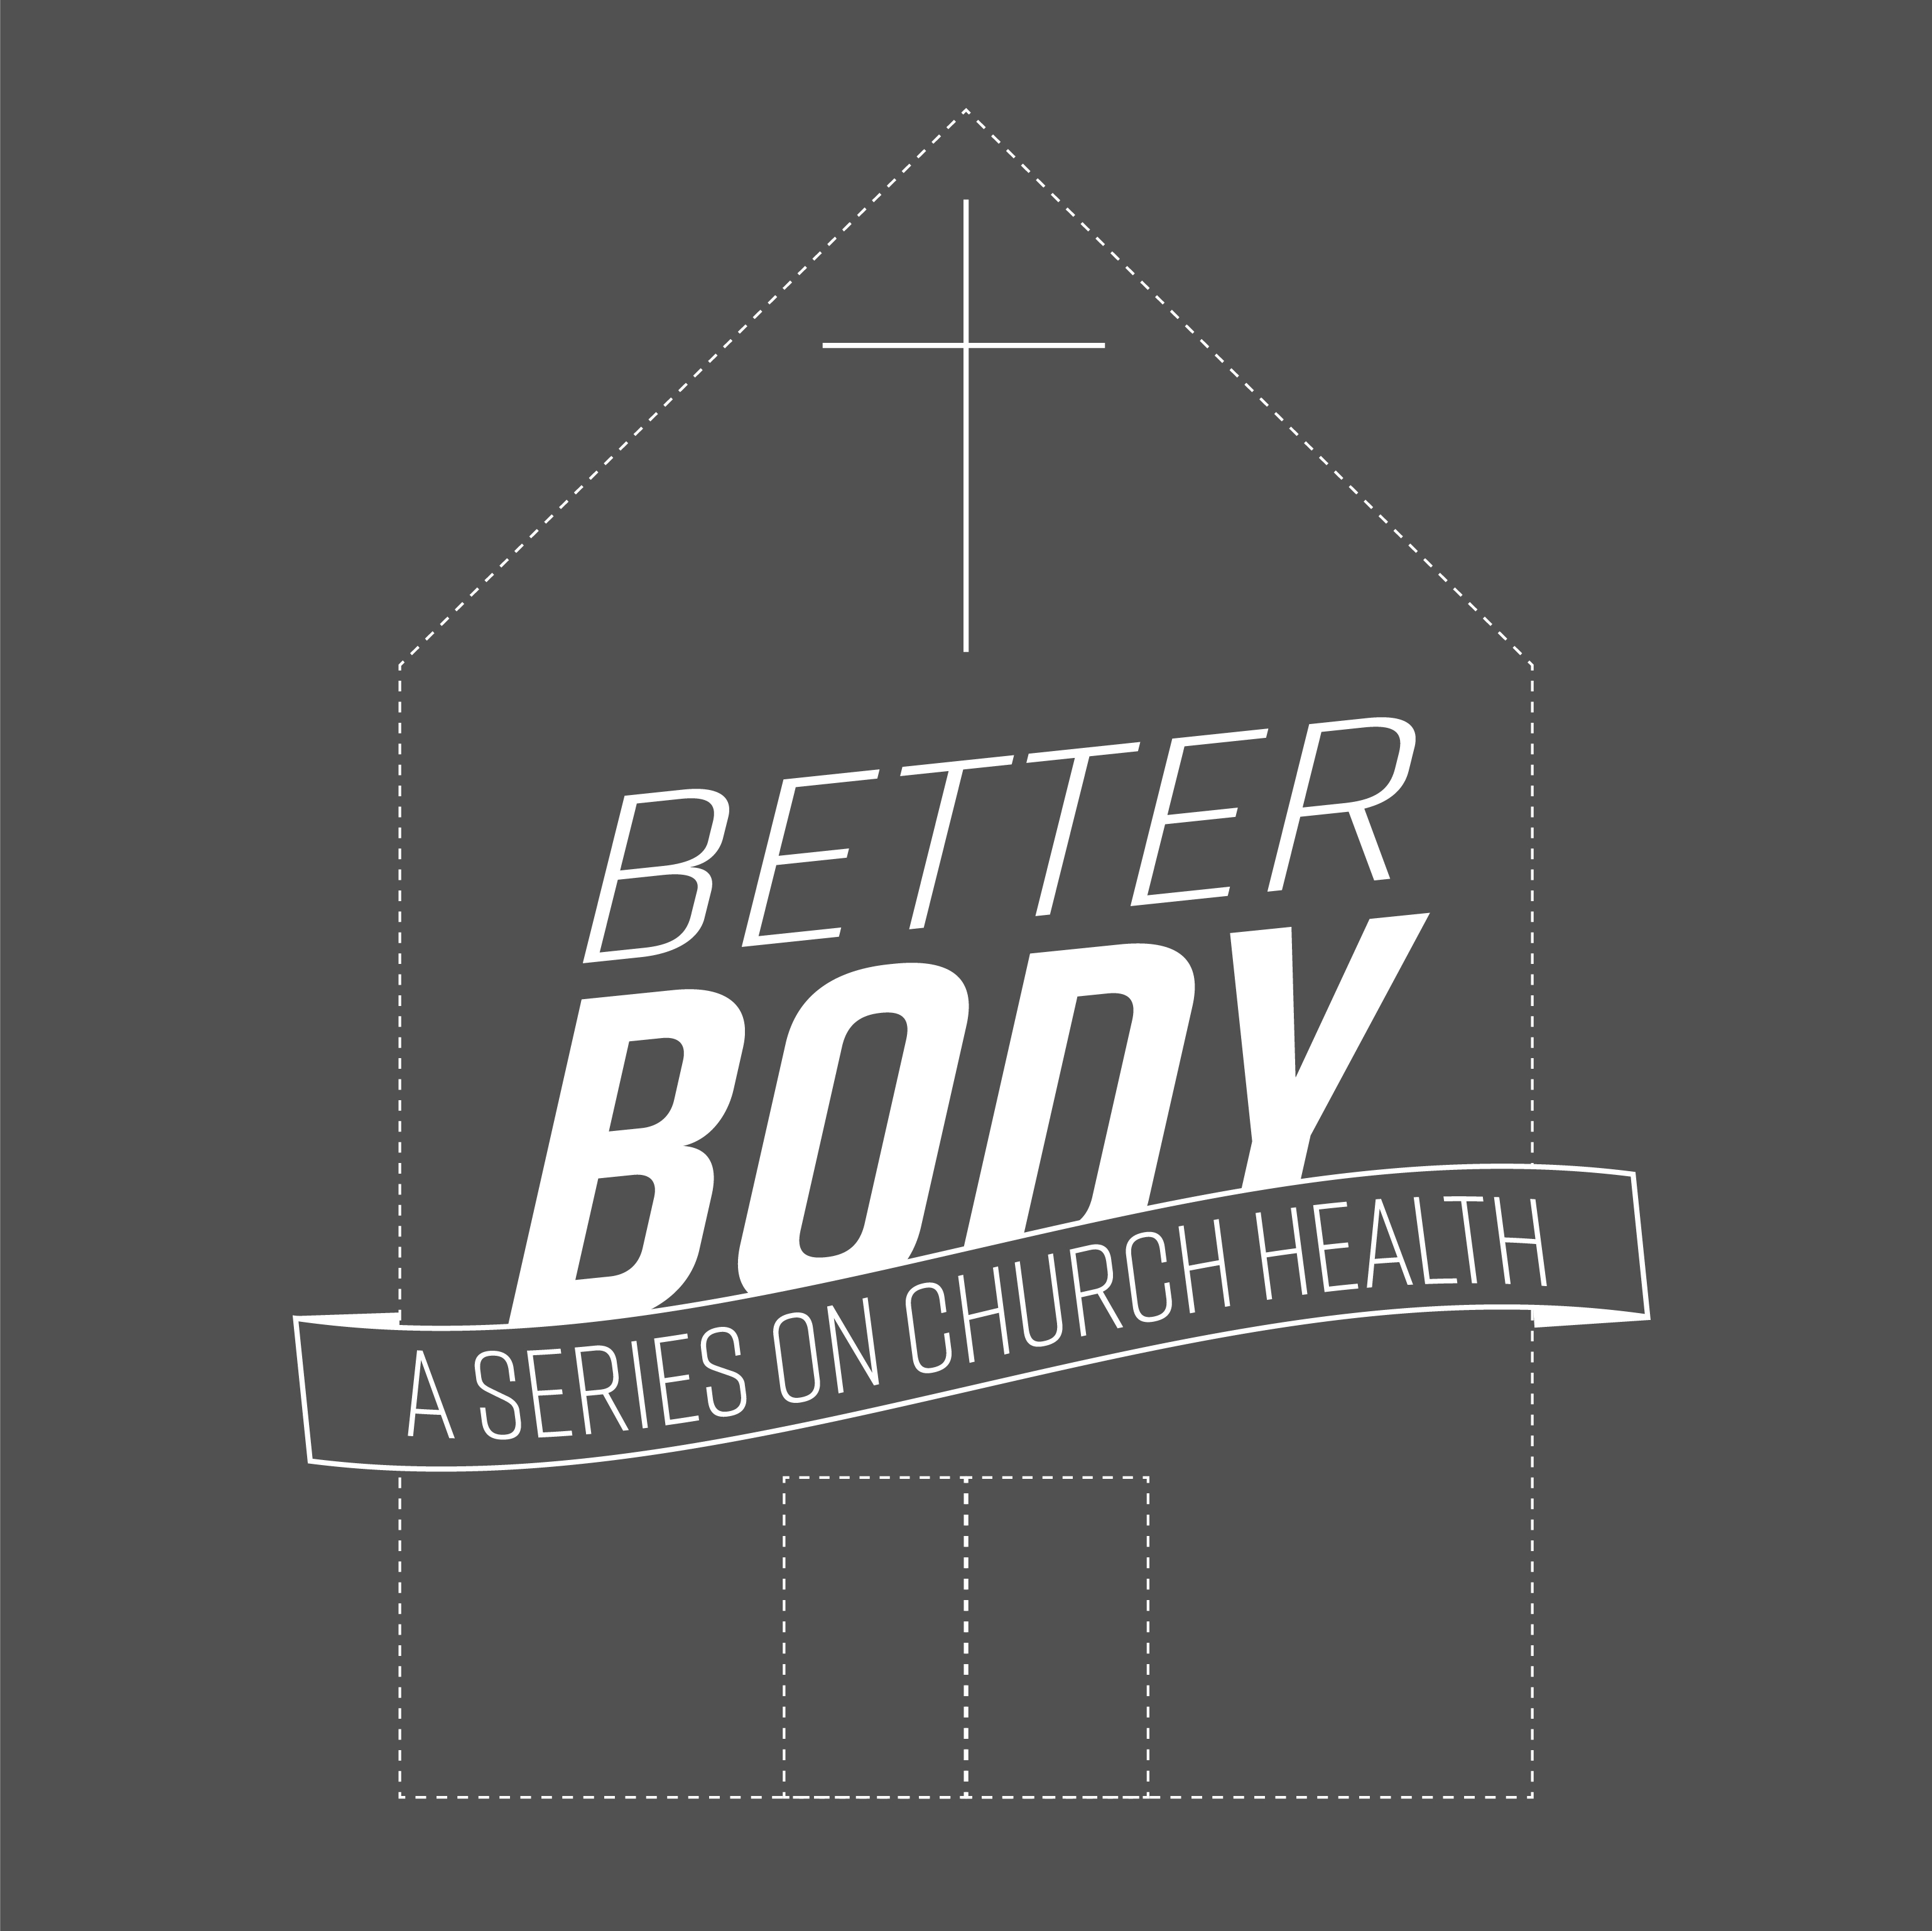 Better Body: Sharing